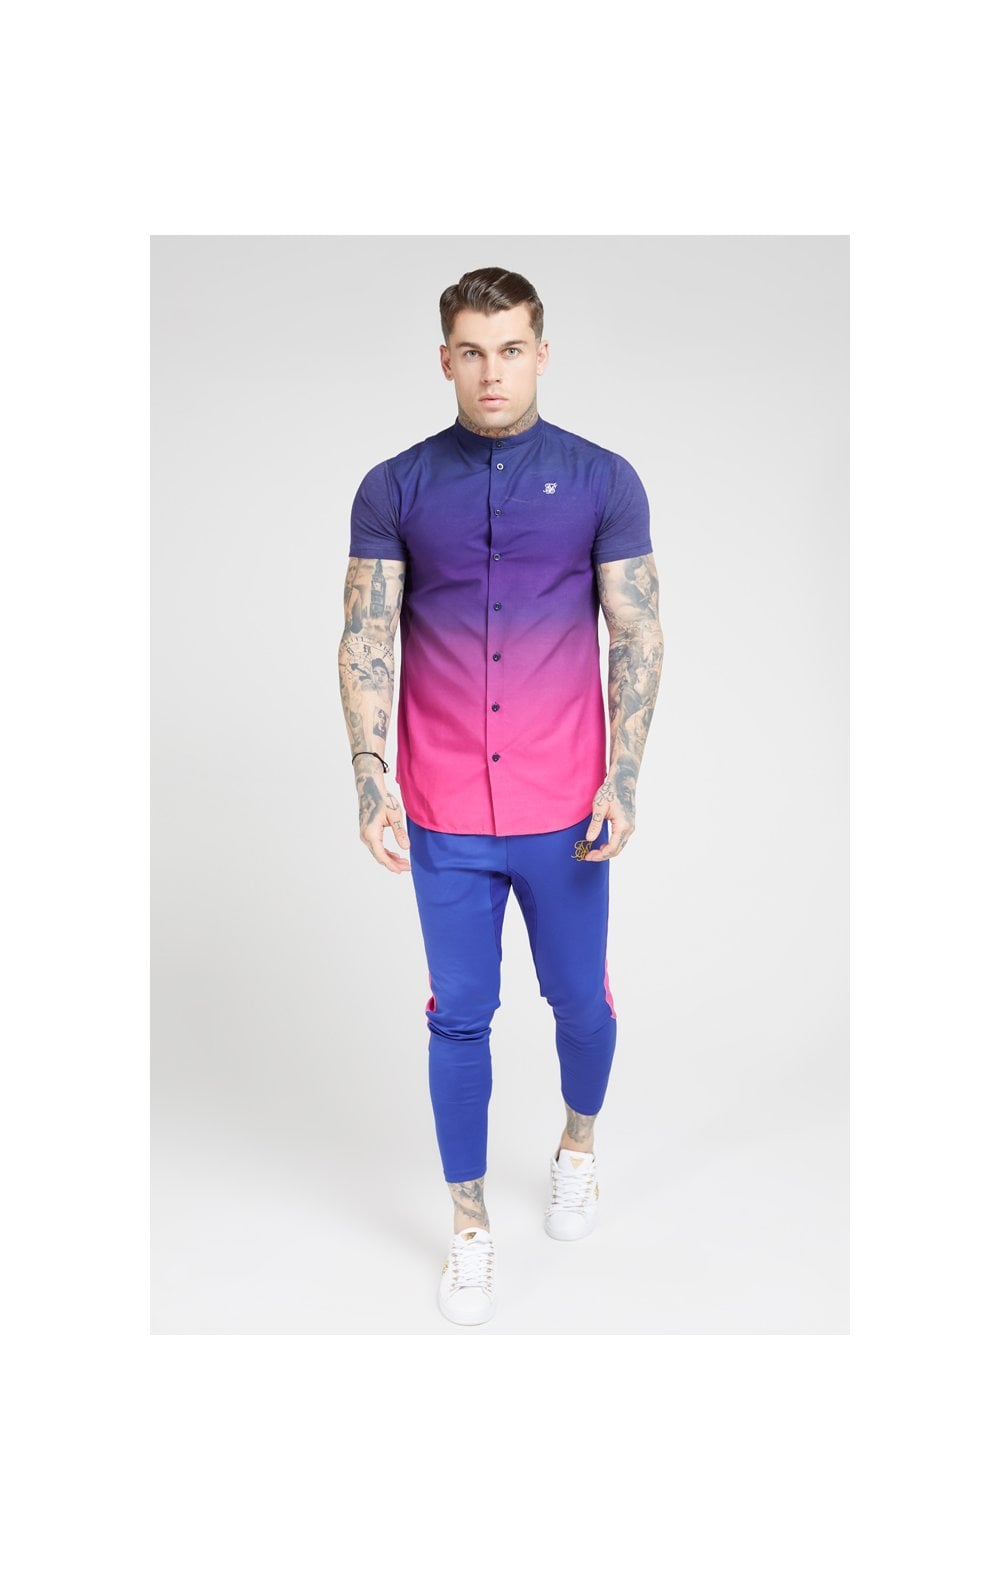 SikSilk S/S Fade Grandad Shirt – Navy & Neon Fade (4)